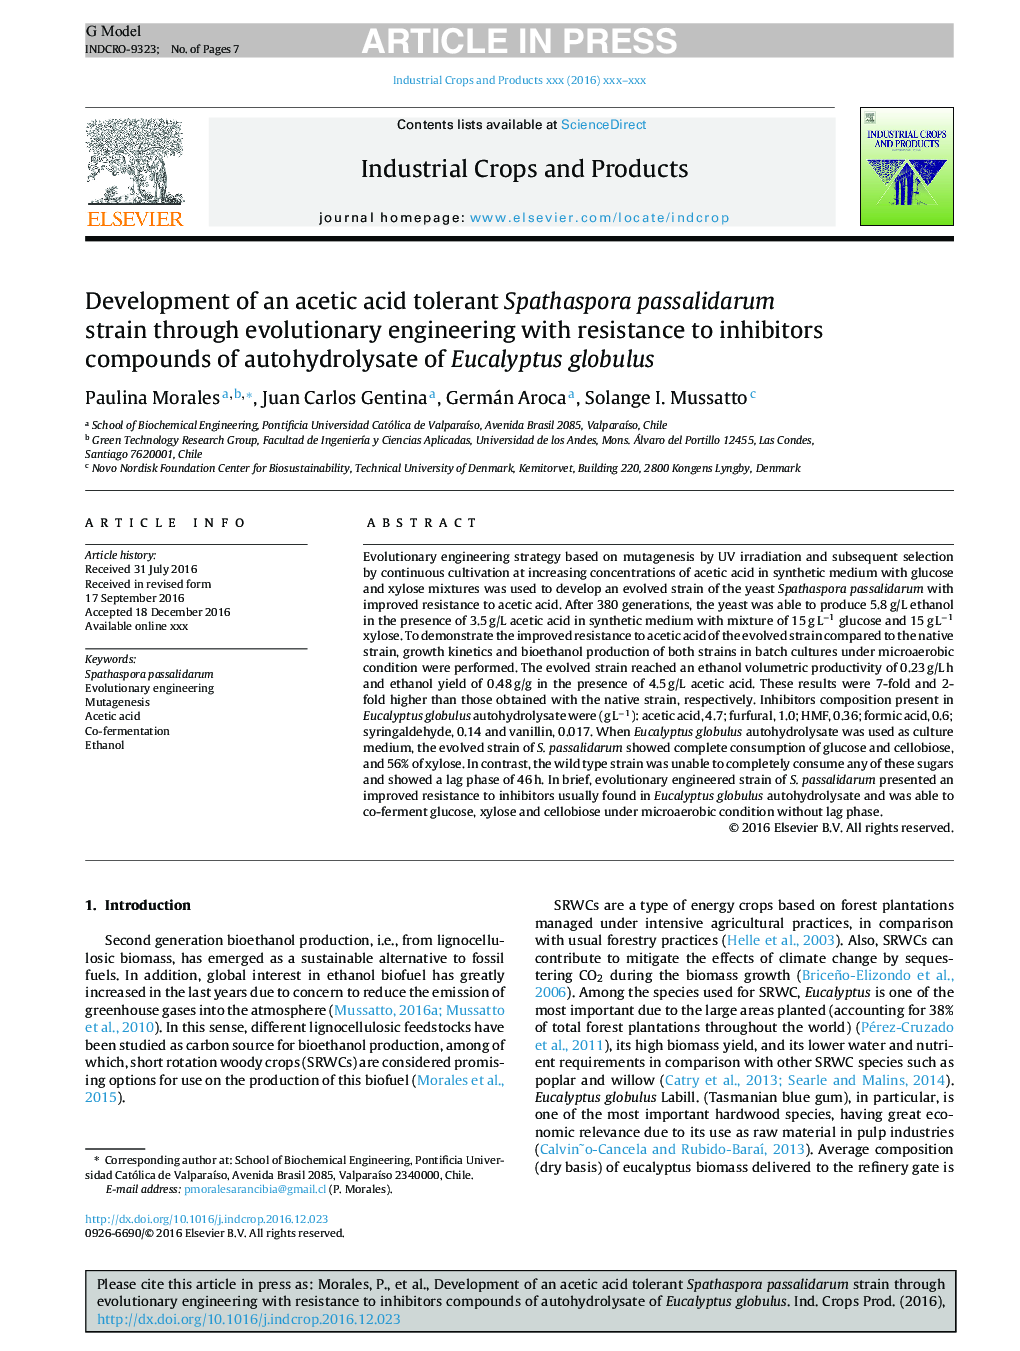 Development of an acetic acid tolerant Spathaspora passalidarum strain through evolutionary engineering with resistance to inhibitors compounds of autohydrolysate of Eucalyptus globulus